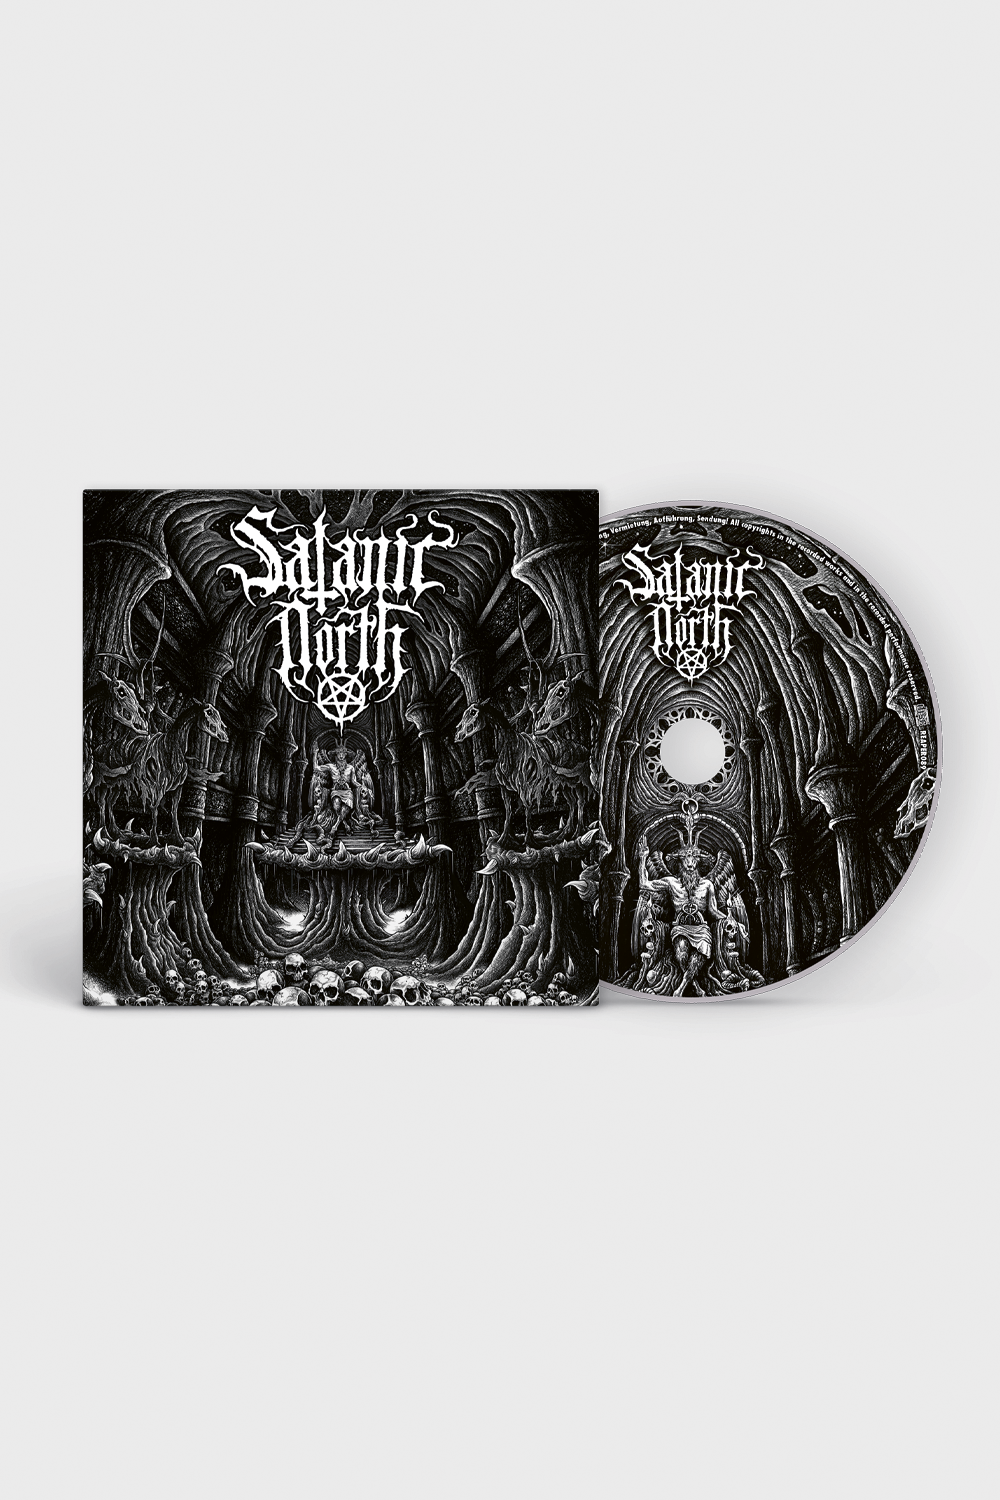 SATANIC NORTH - Satanic North CD (PREORDER)